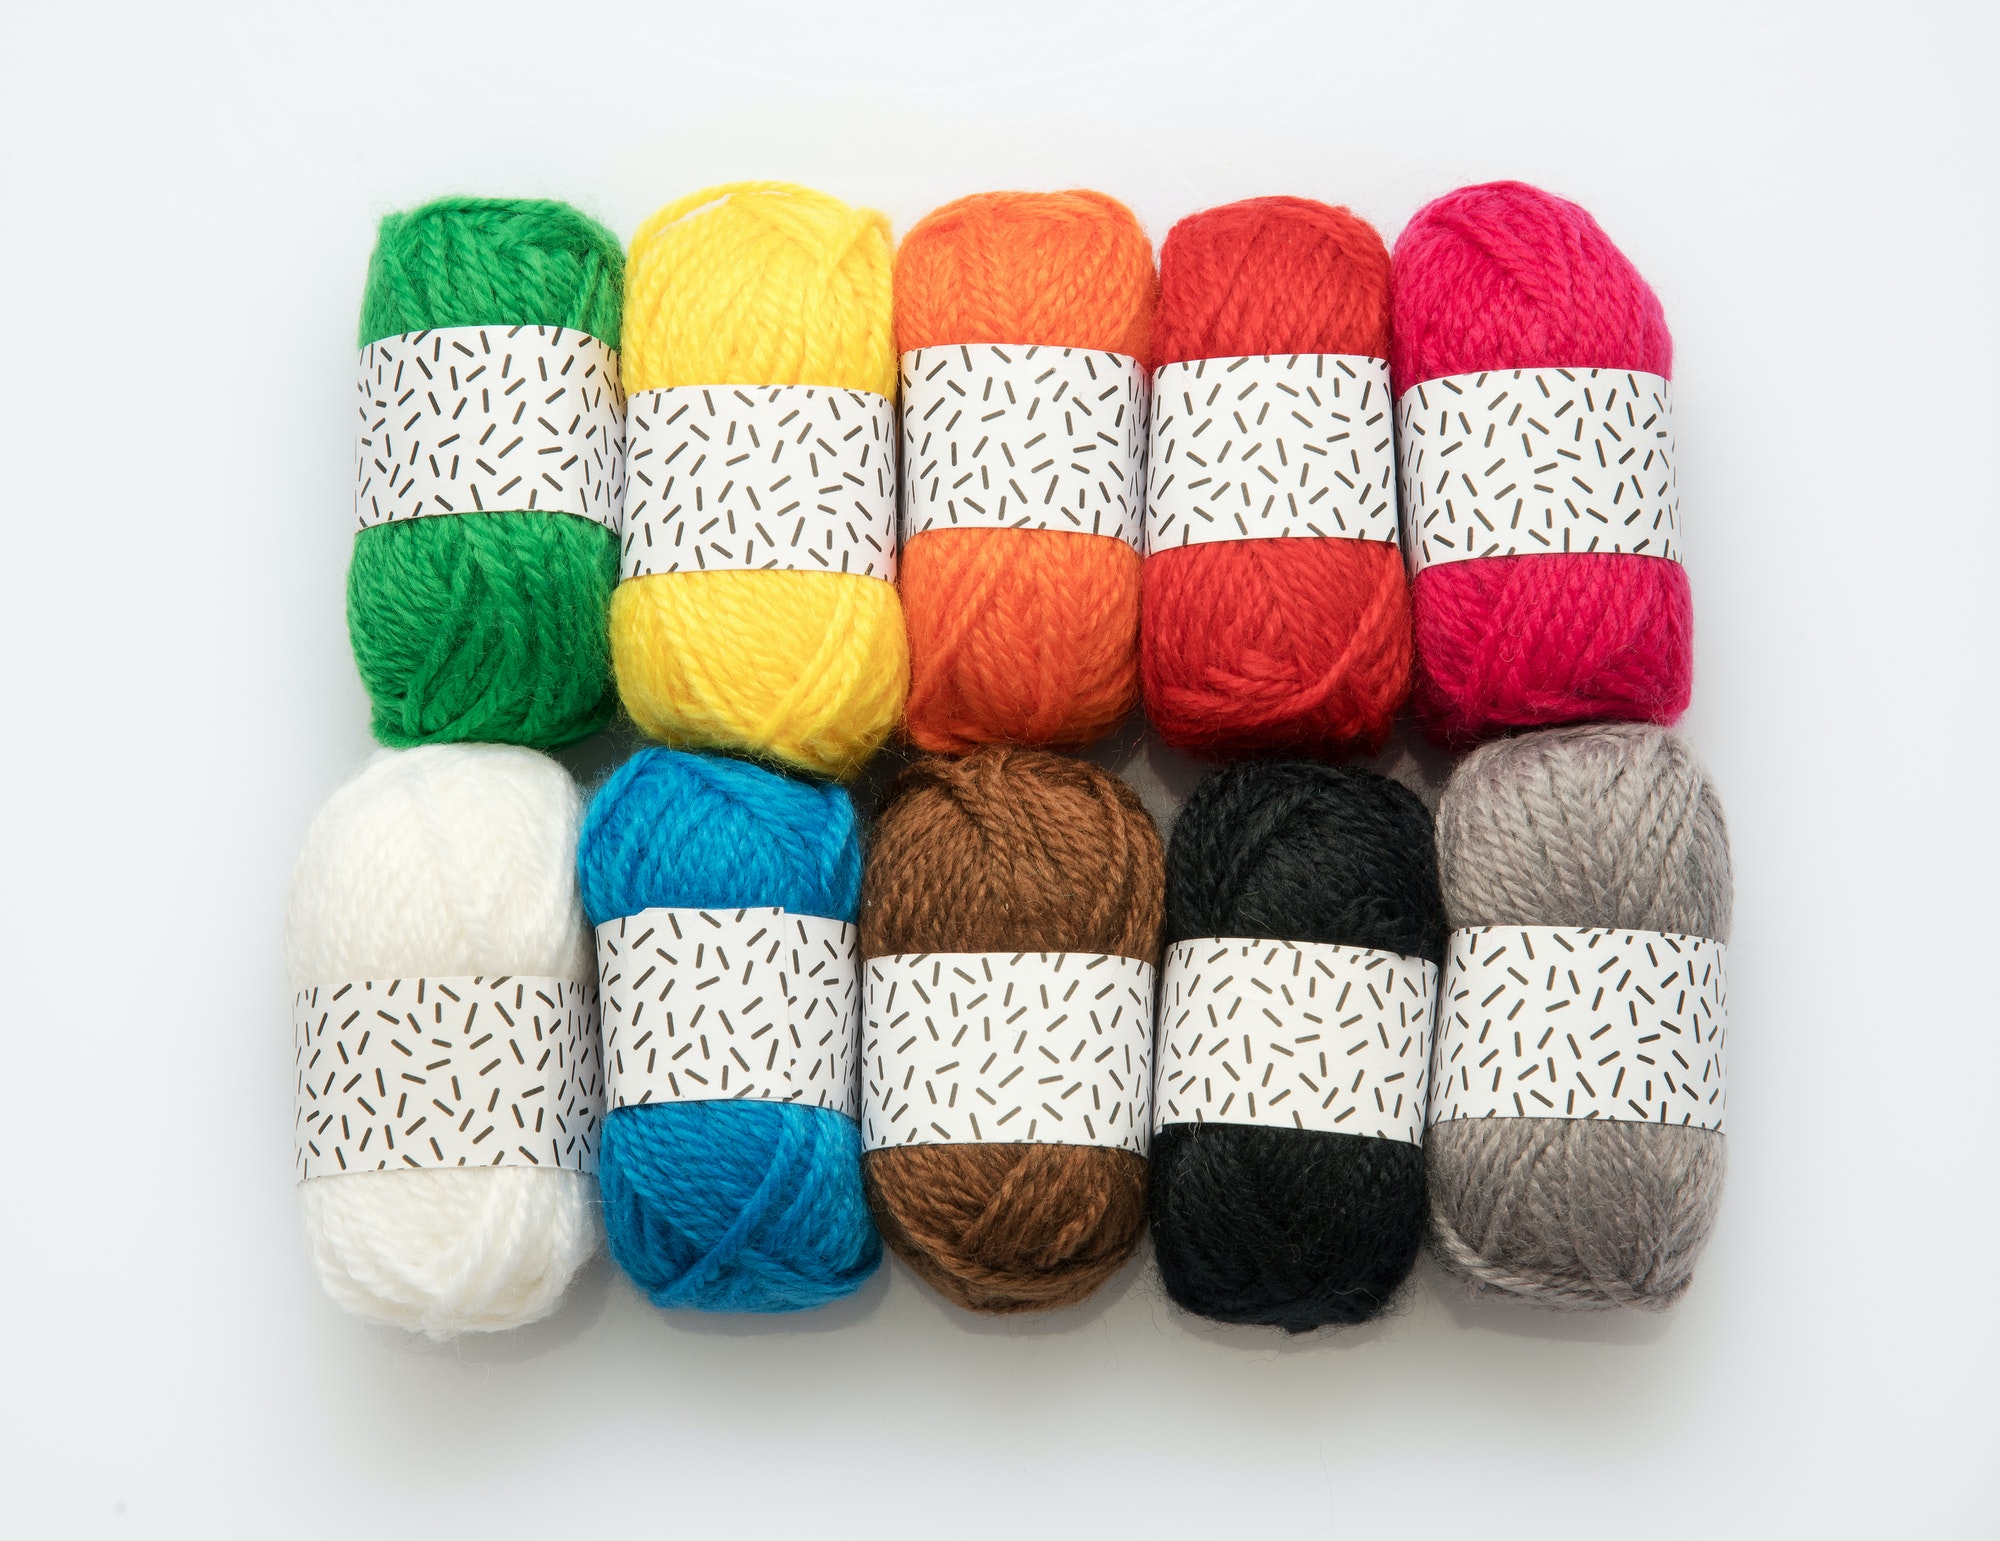 Ten assorted colors of wool yarn in balls